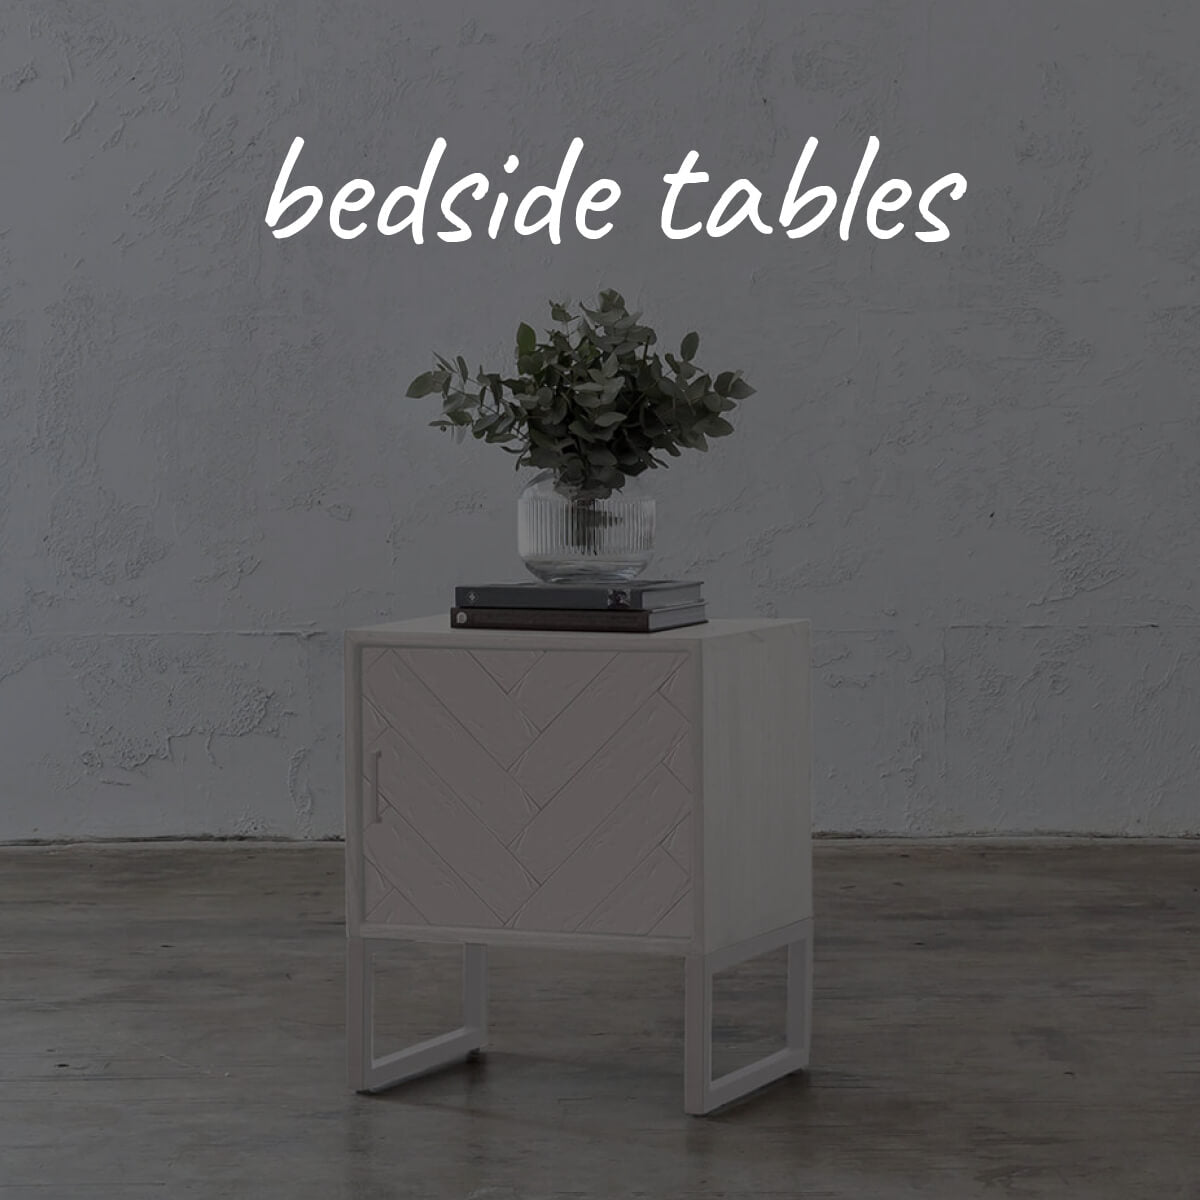 BEDROOM  |  BED SIDE TABLES